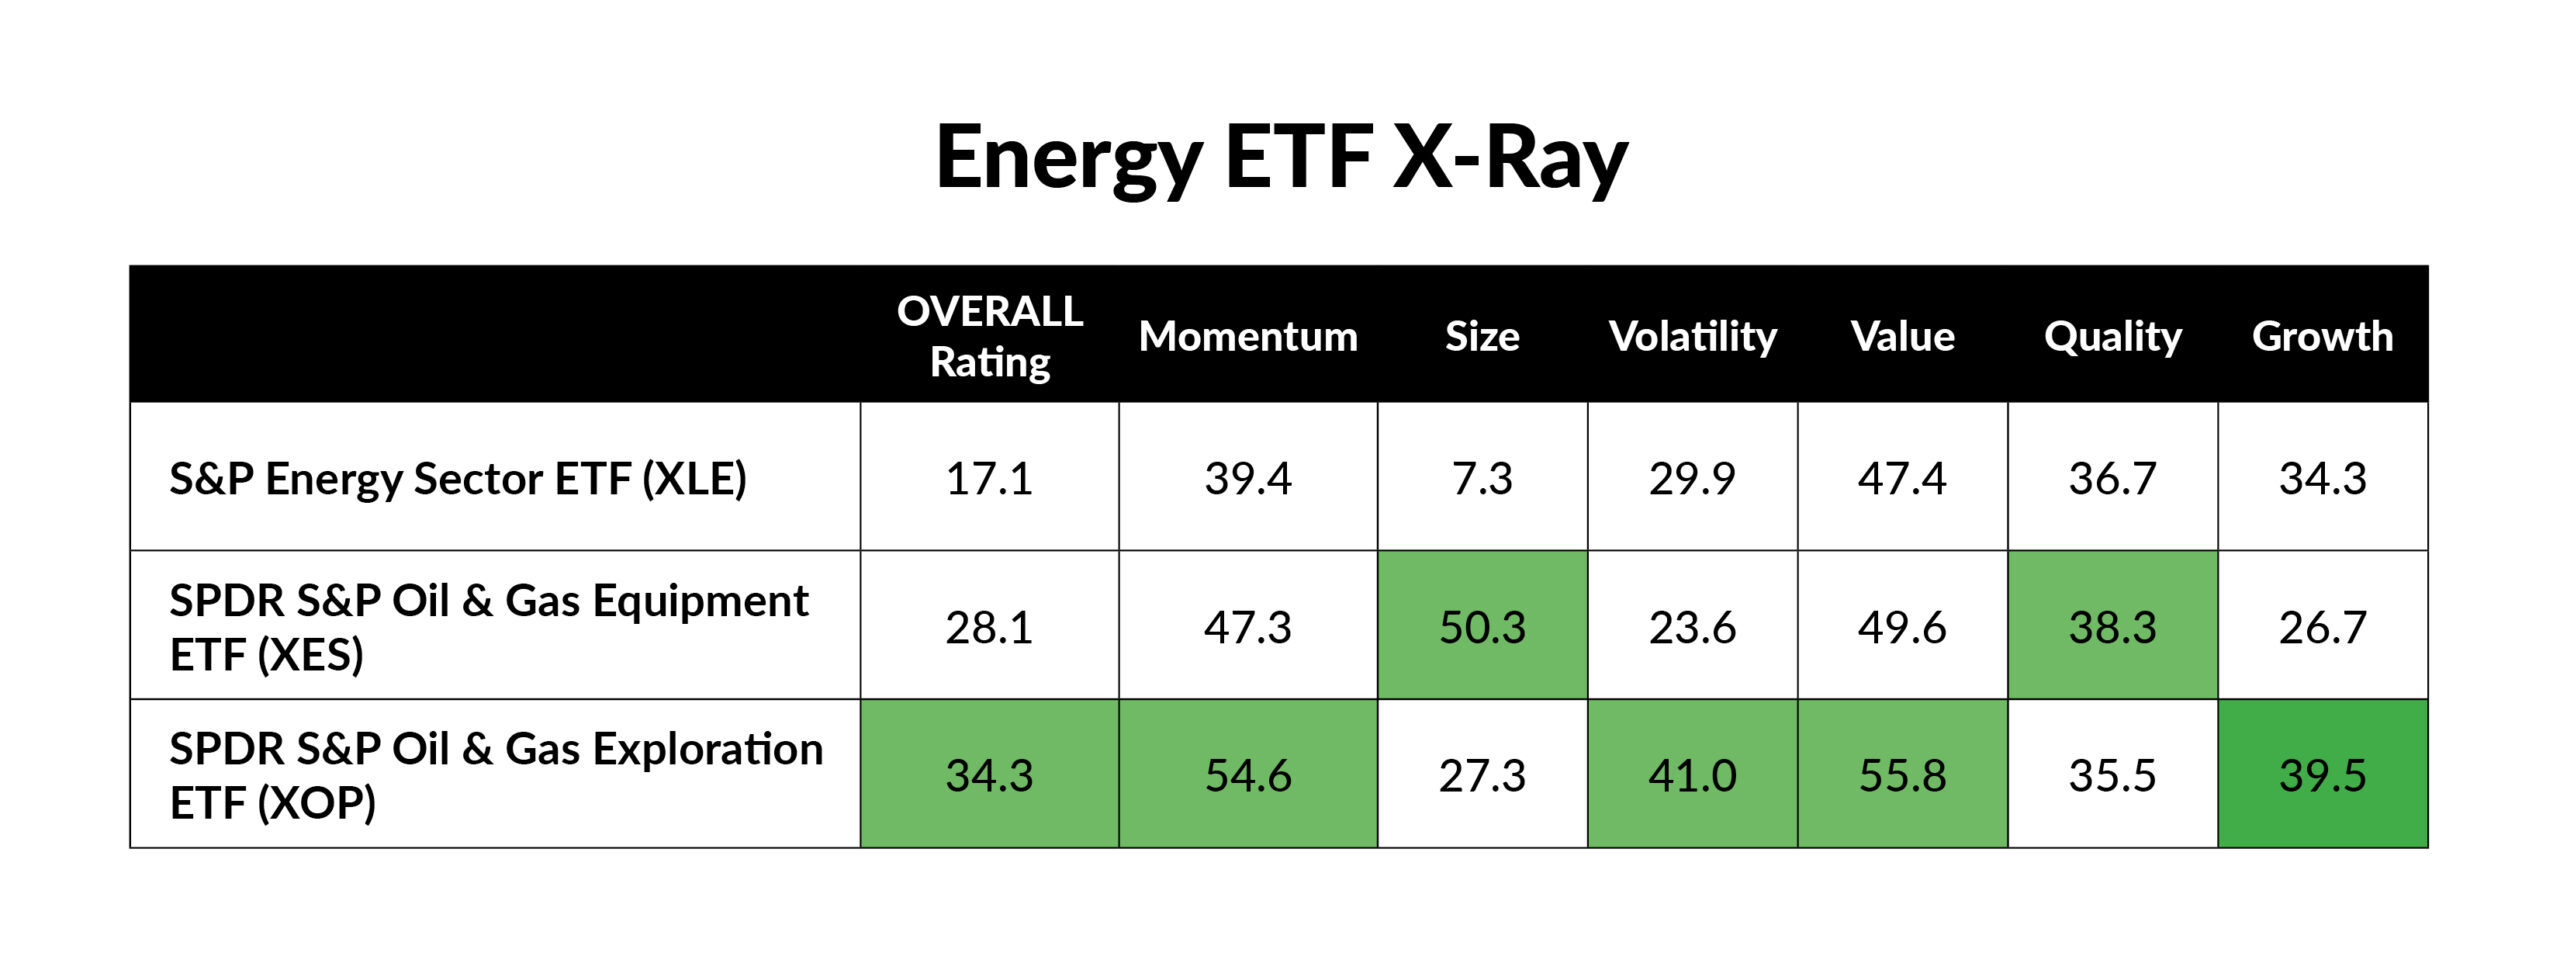 Best Energy ETF to Buy in 2021? XLE vs. XES vs. XOP